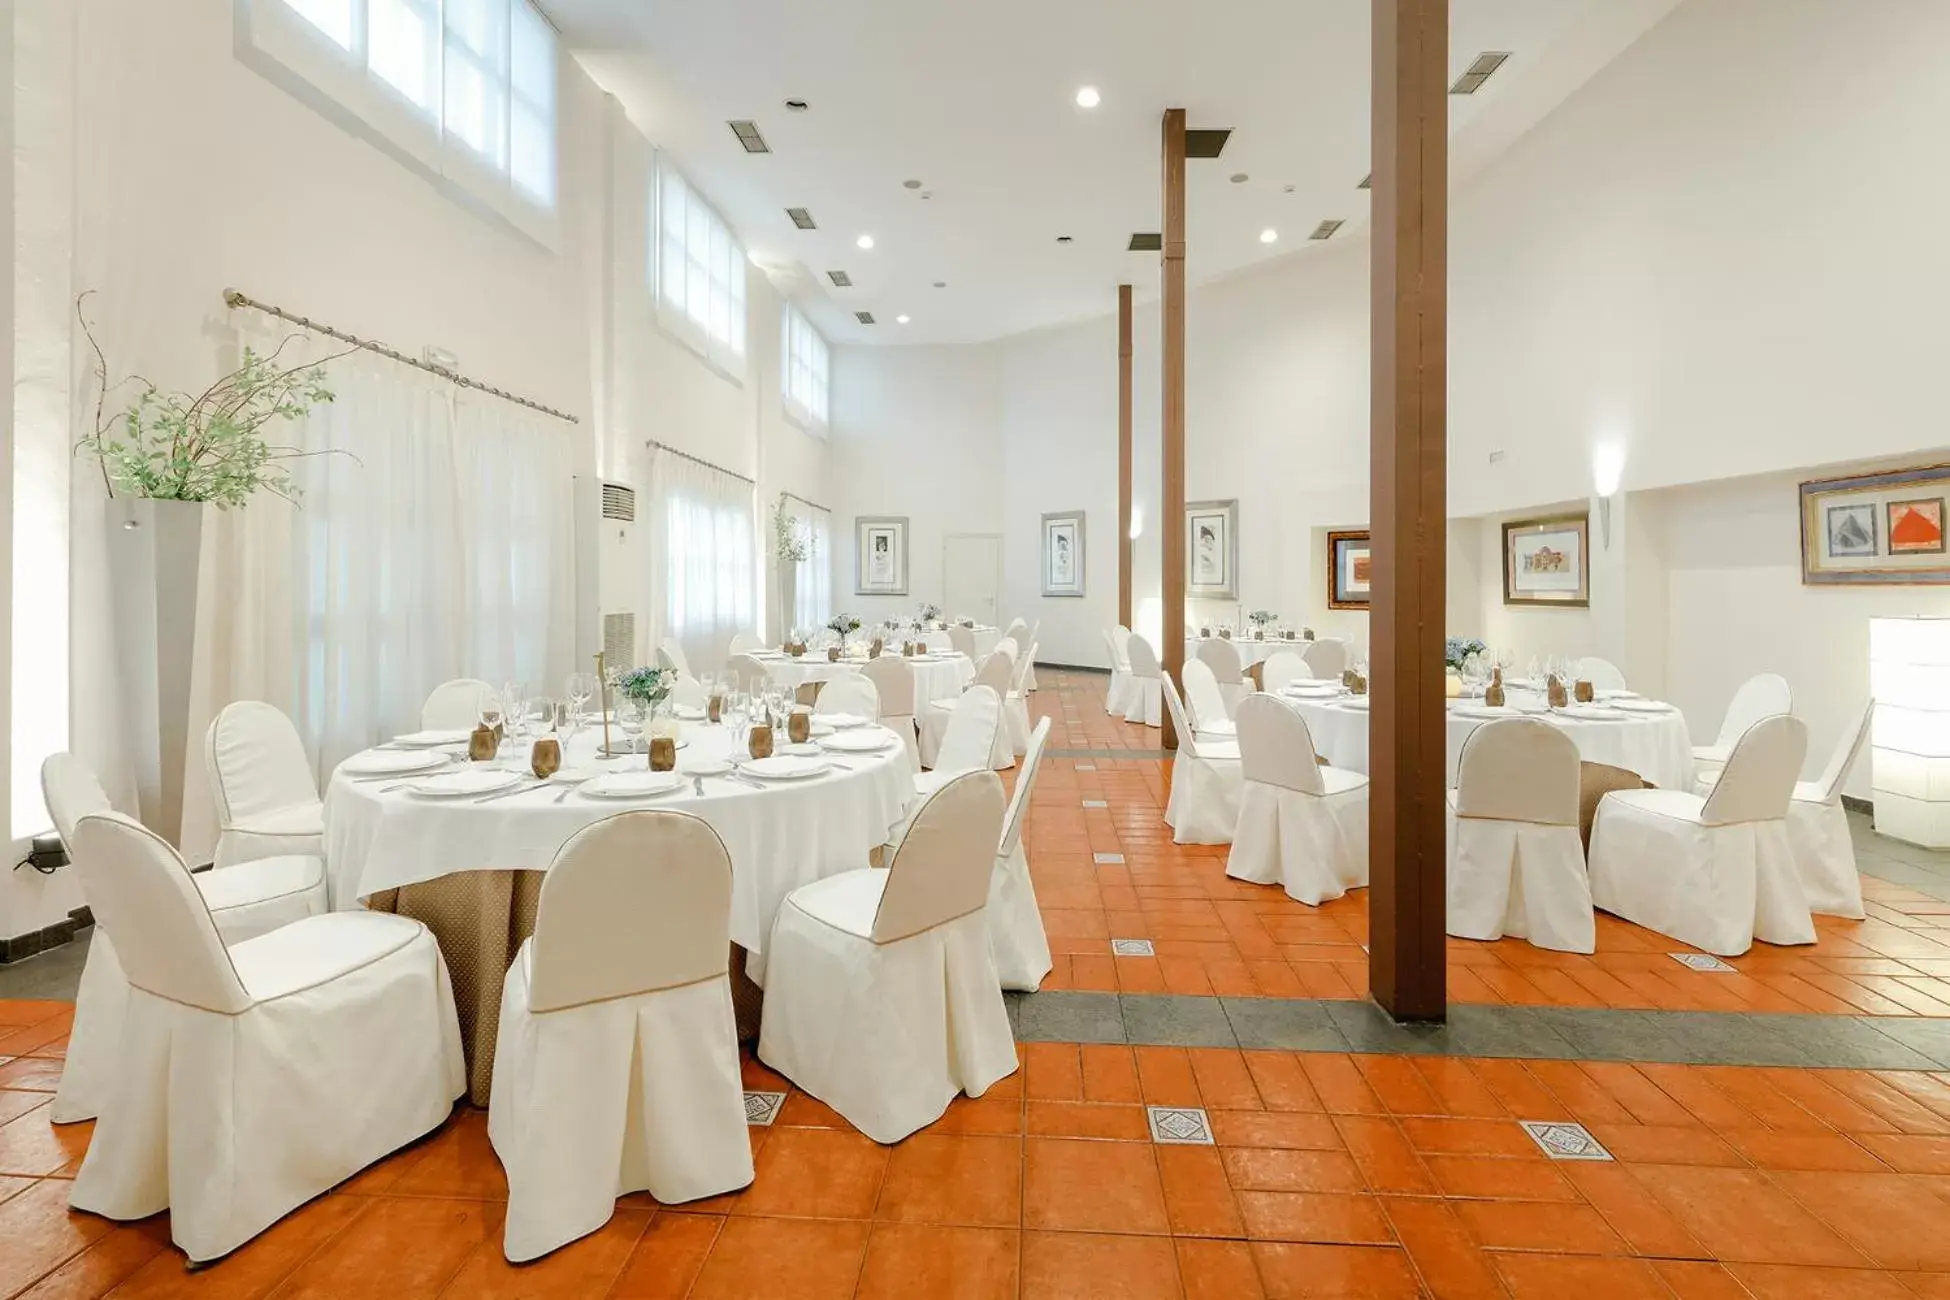 Banquet/Function facilities, Banquet Facilities in Abba Euskalduna Hotel